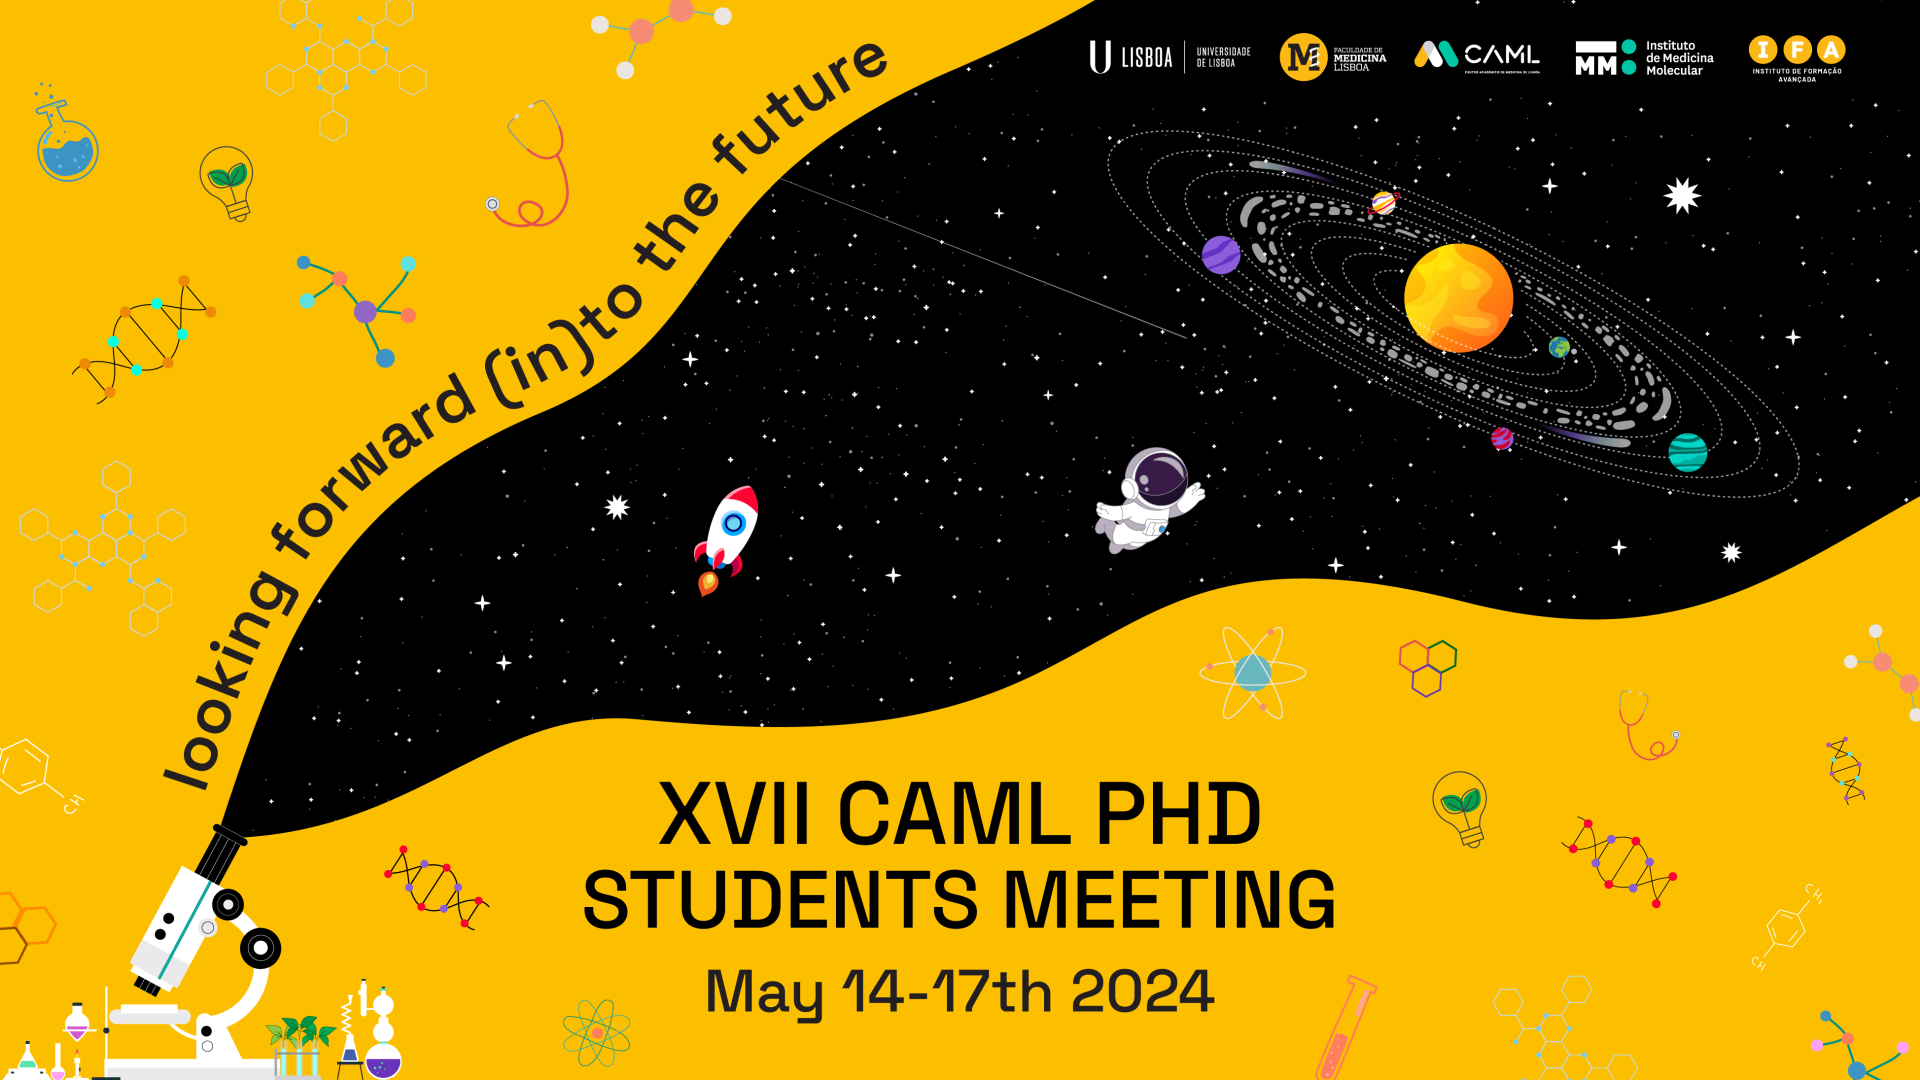 XVII CAML PhD Students Meeting